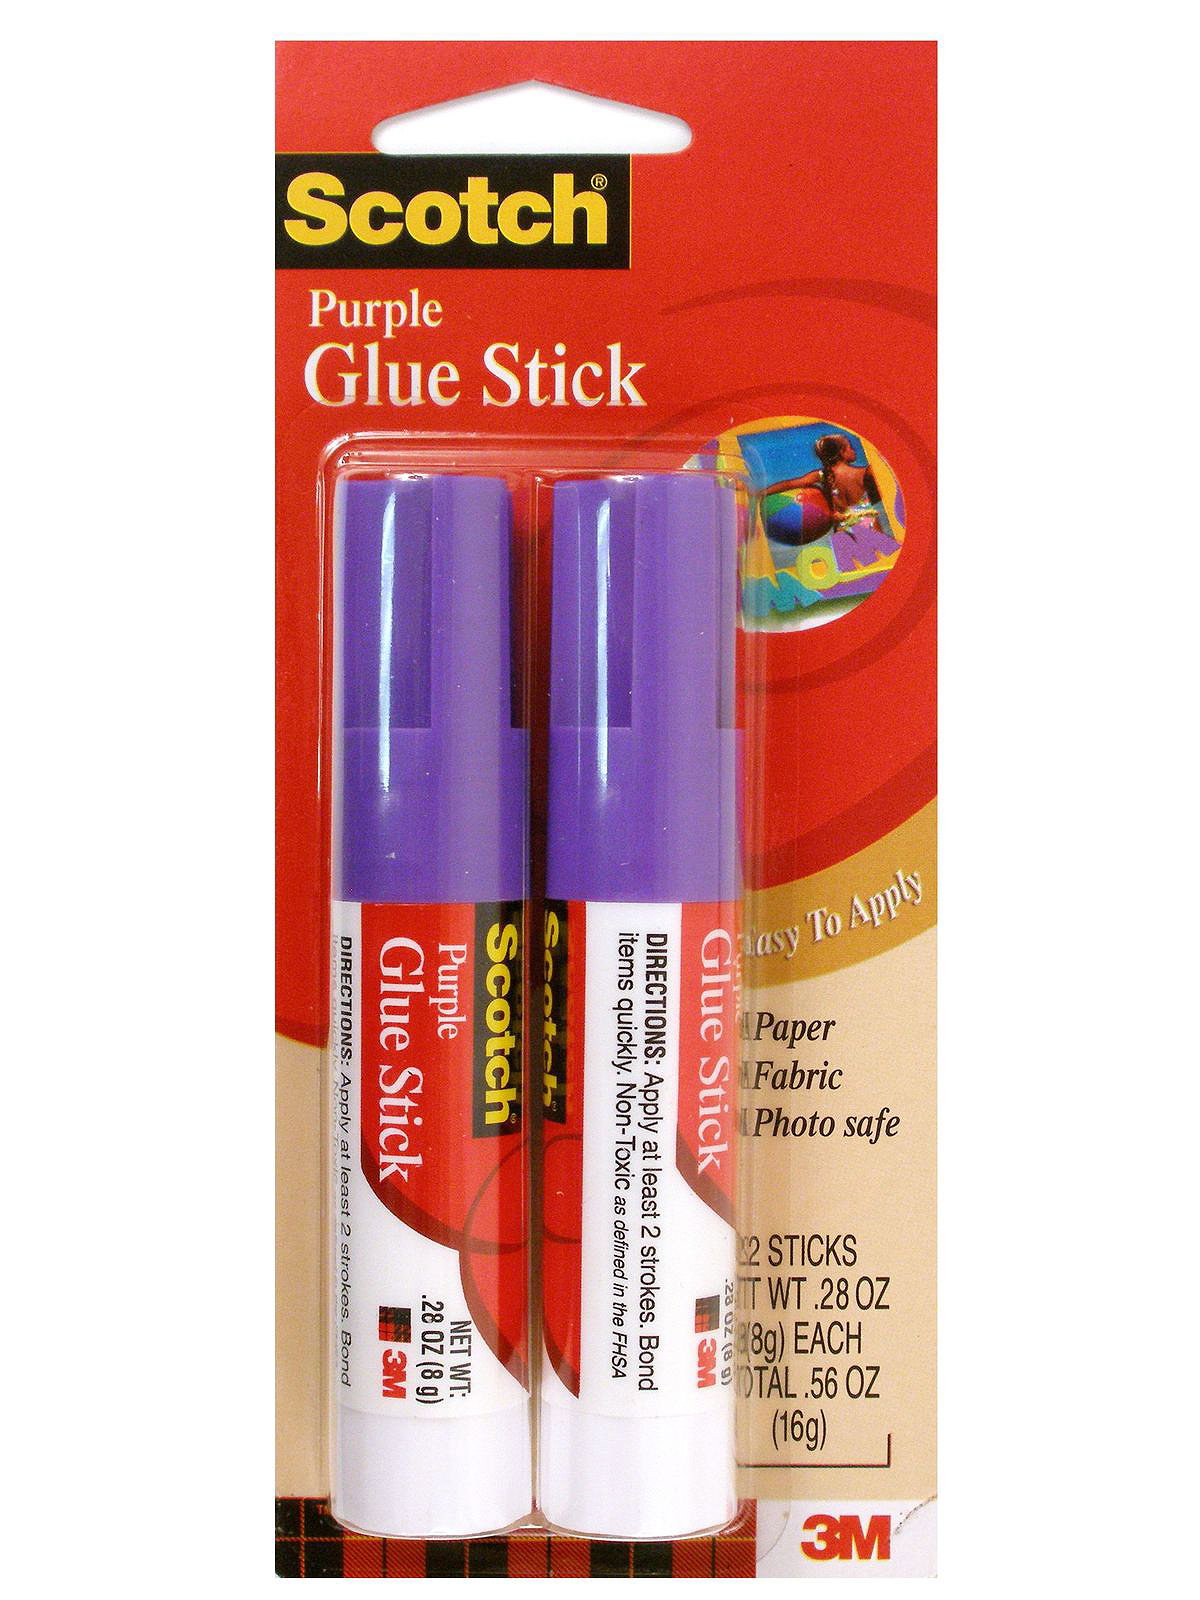 3M Scotch Permanent Adhesive Purple & White Glue Stick Value Pack, 4 x 8g